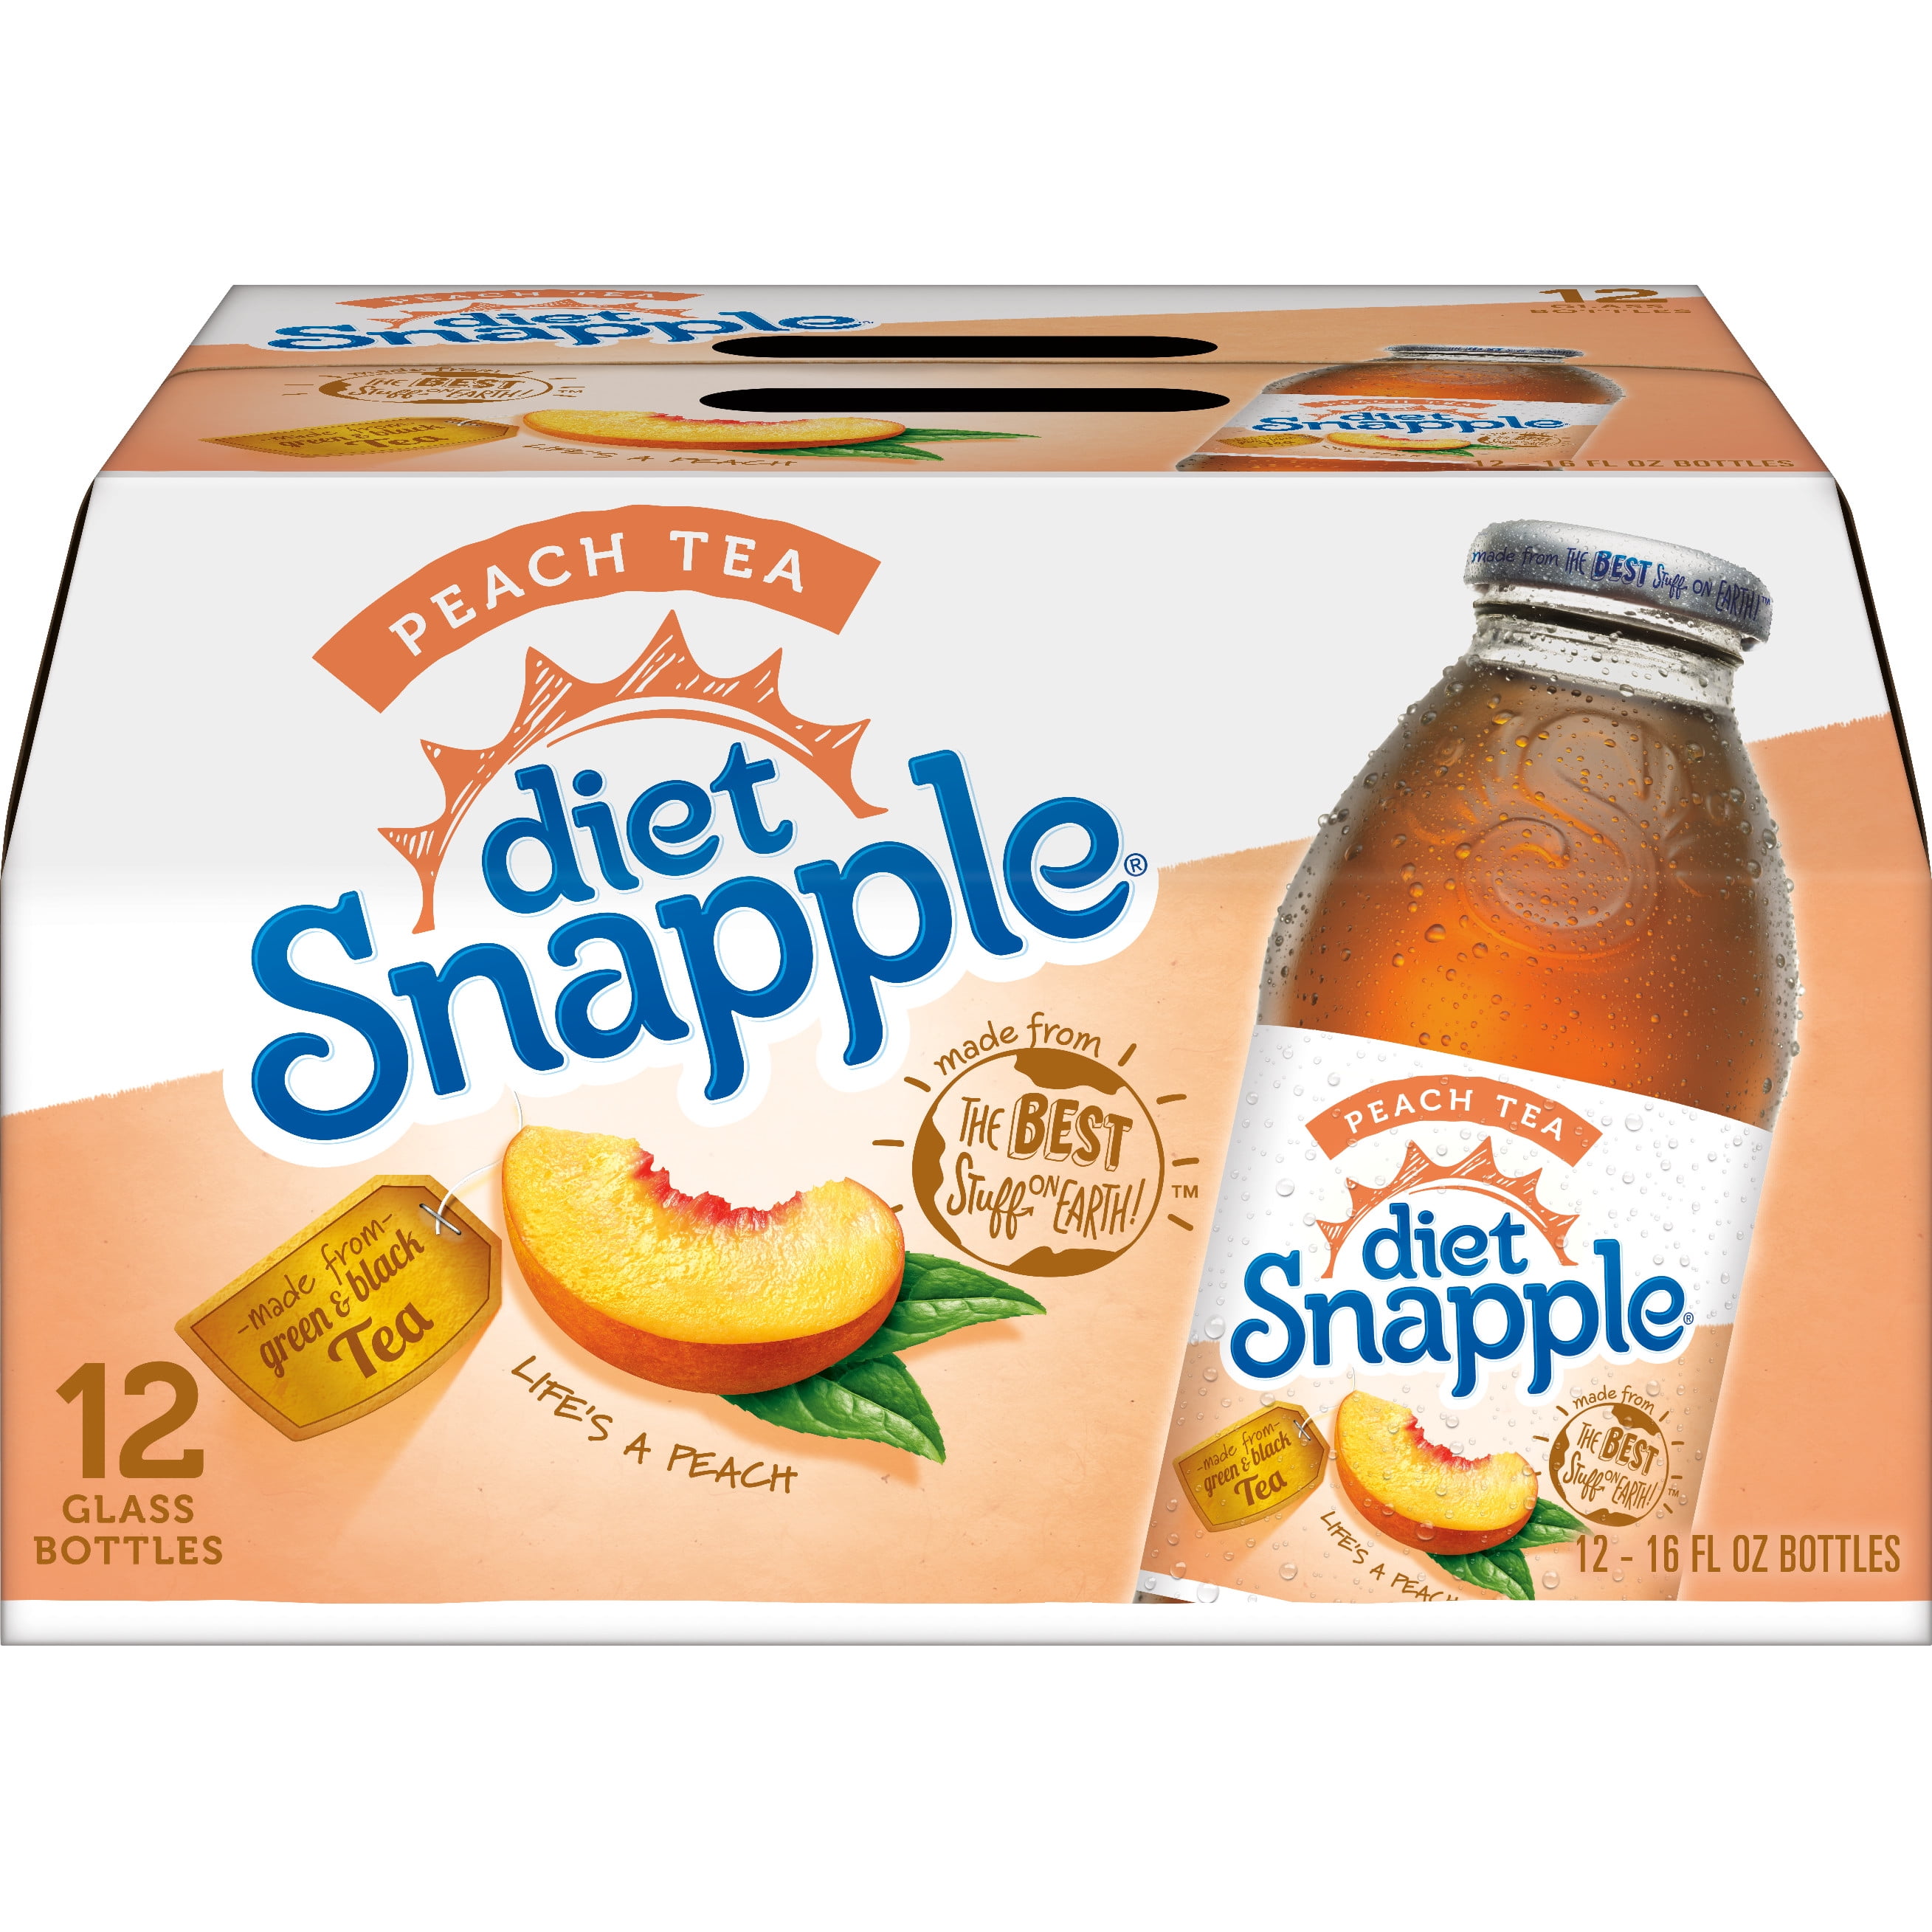 Snapple All Natural Diet Peach Tea, 6 bottles / 16 fl oz - Ralphs